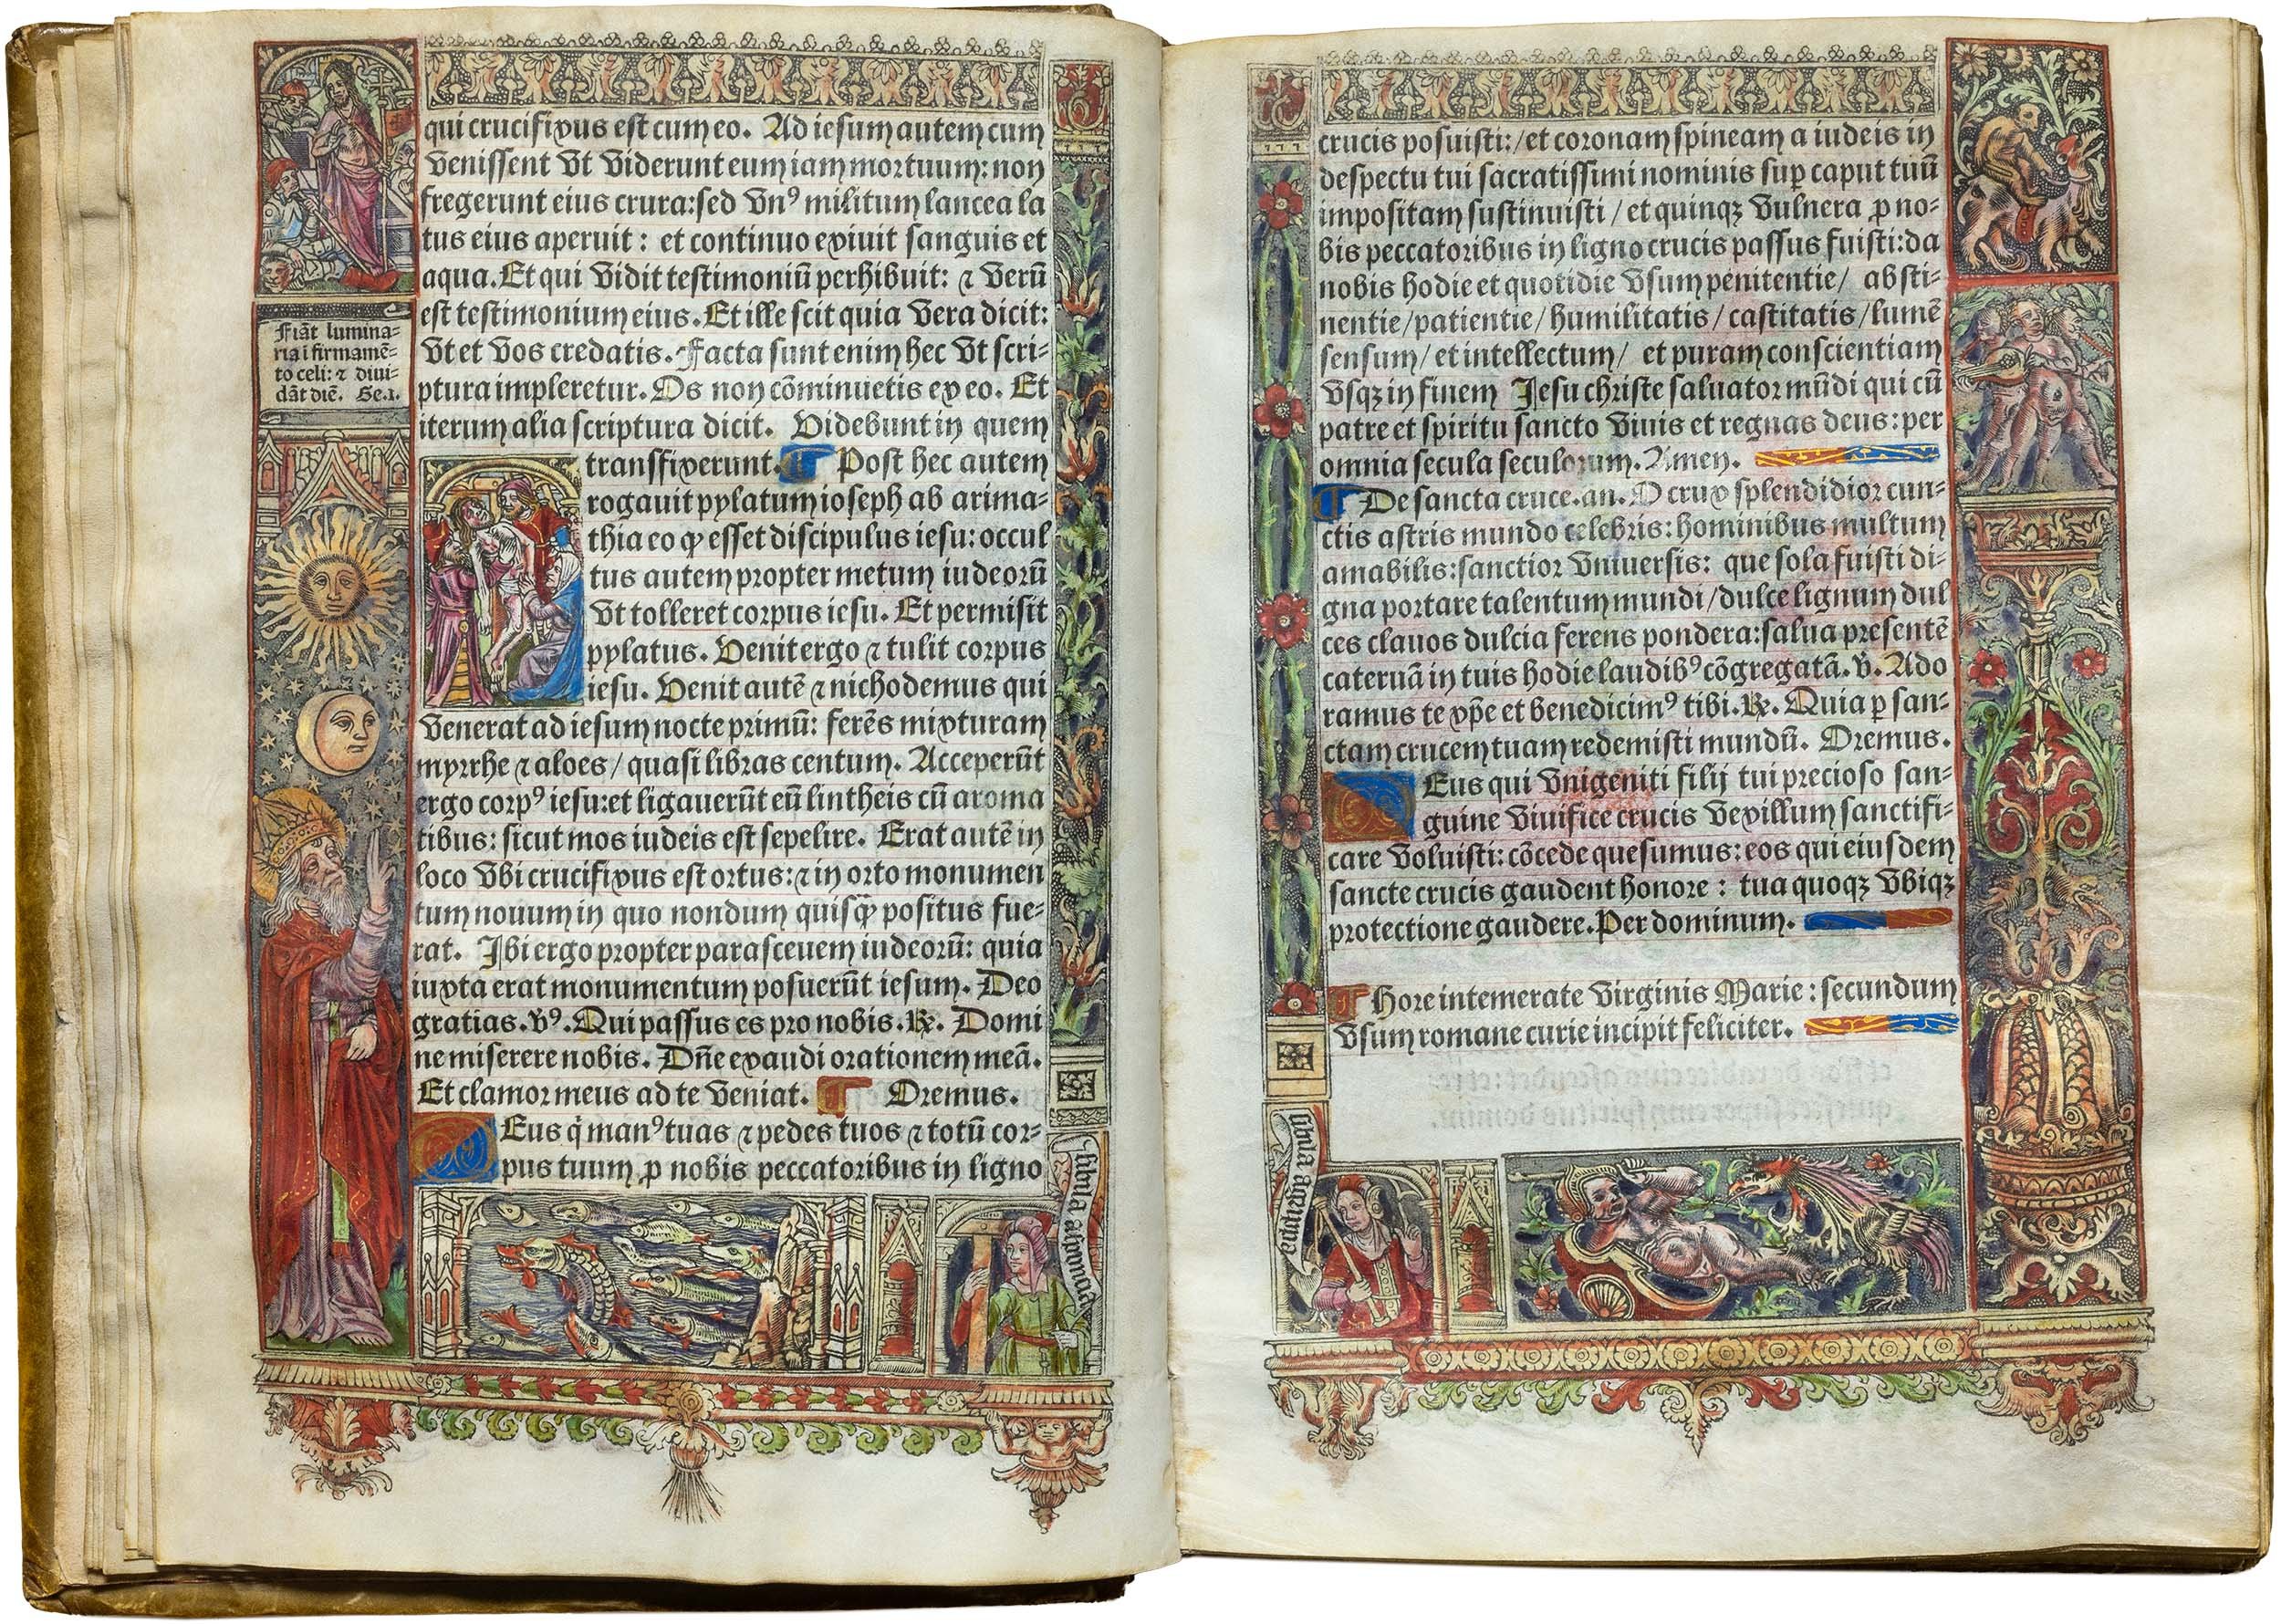 Horae-bmv-31-march-1511-kerver-printed-book-of-hours-illuminated-copy-vellum-18.jpg